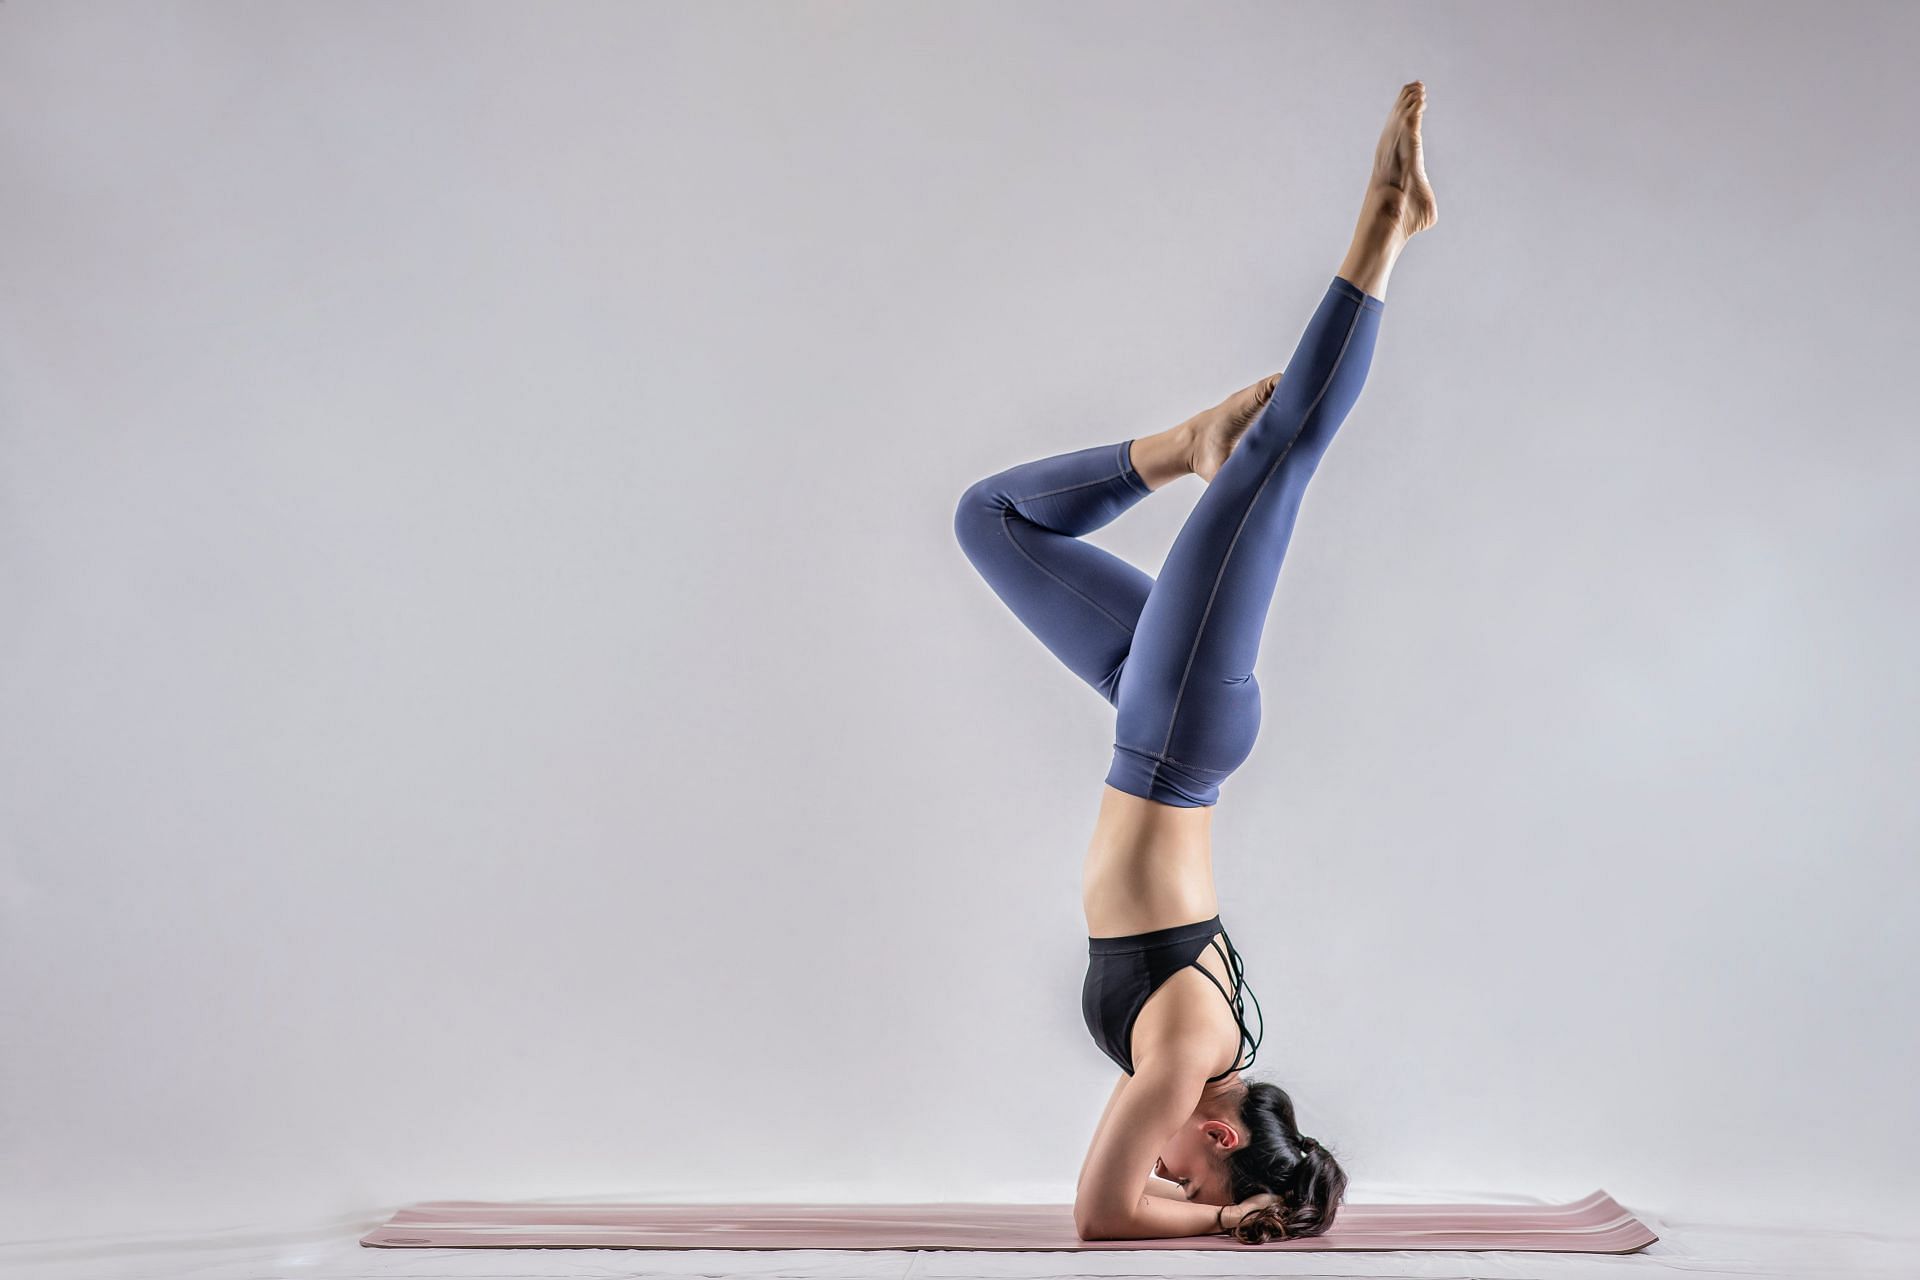 How to Balance in Headstand (Sirsasana), Yoga Alignment